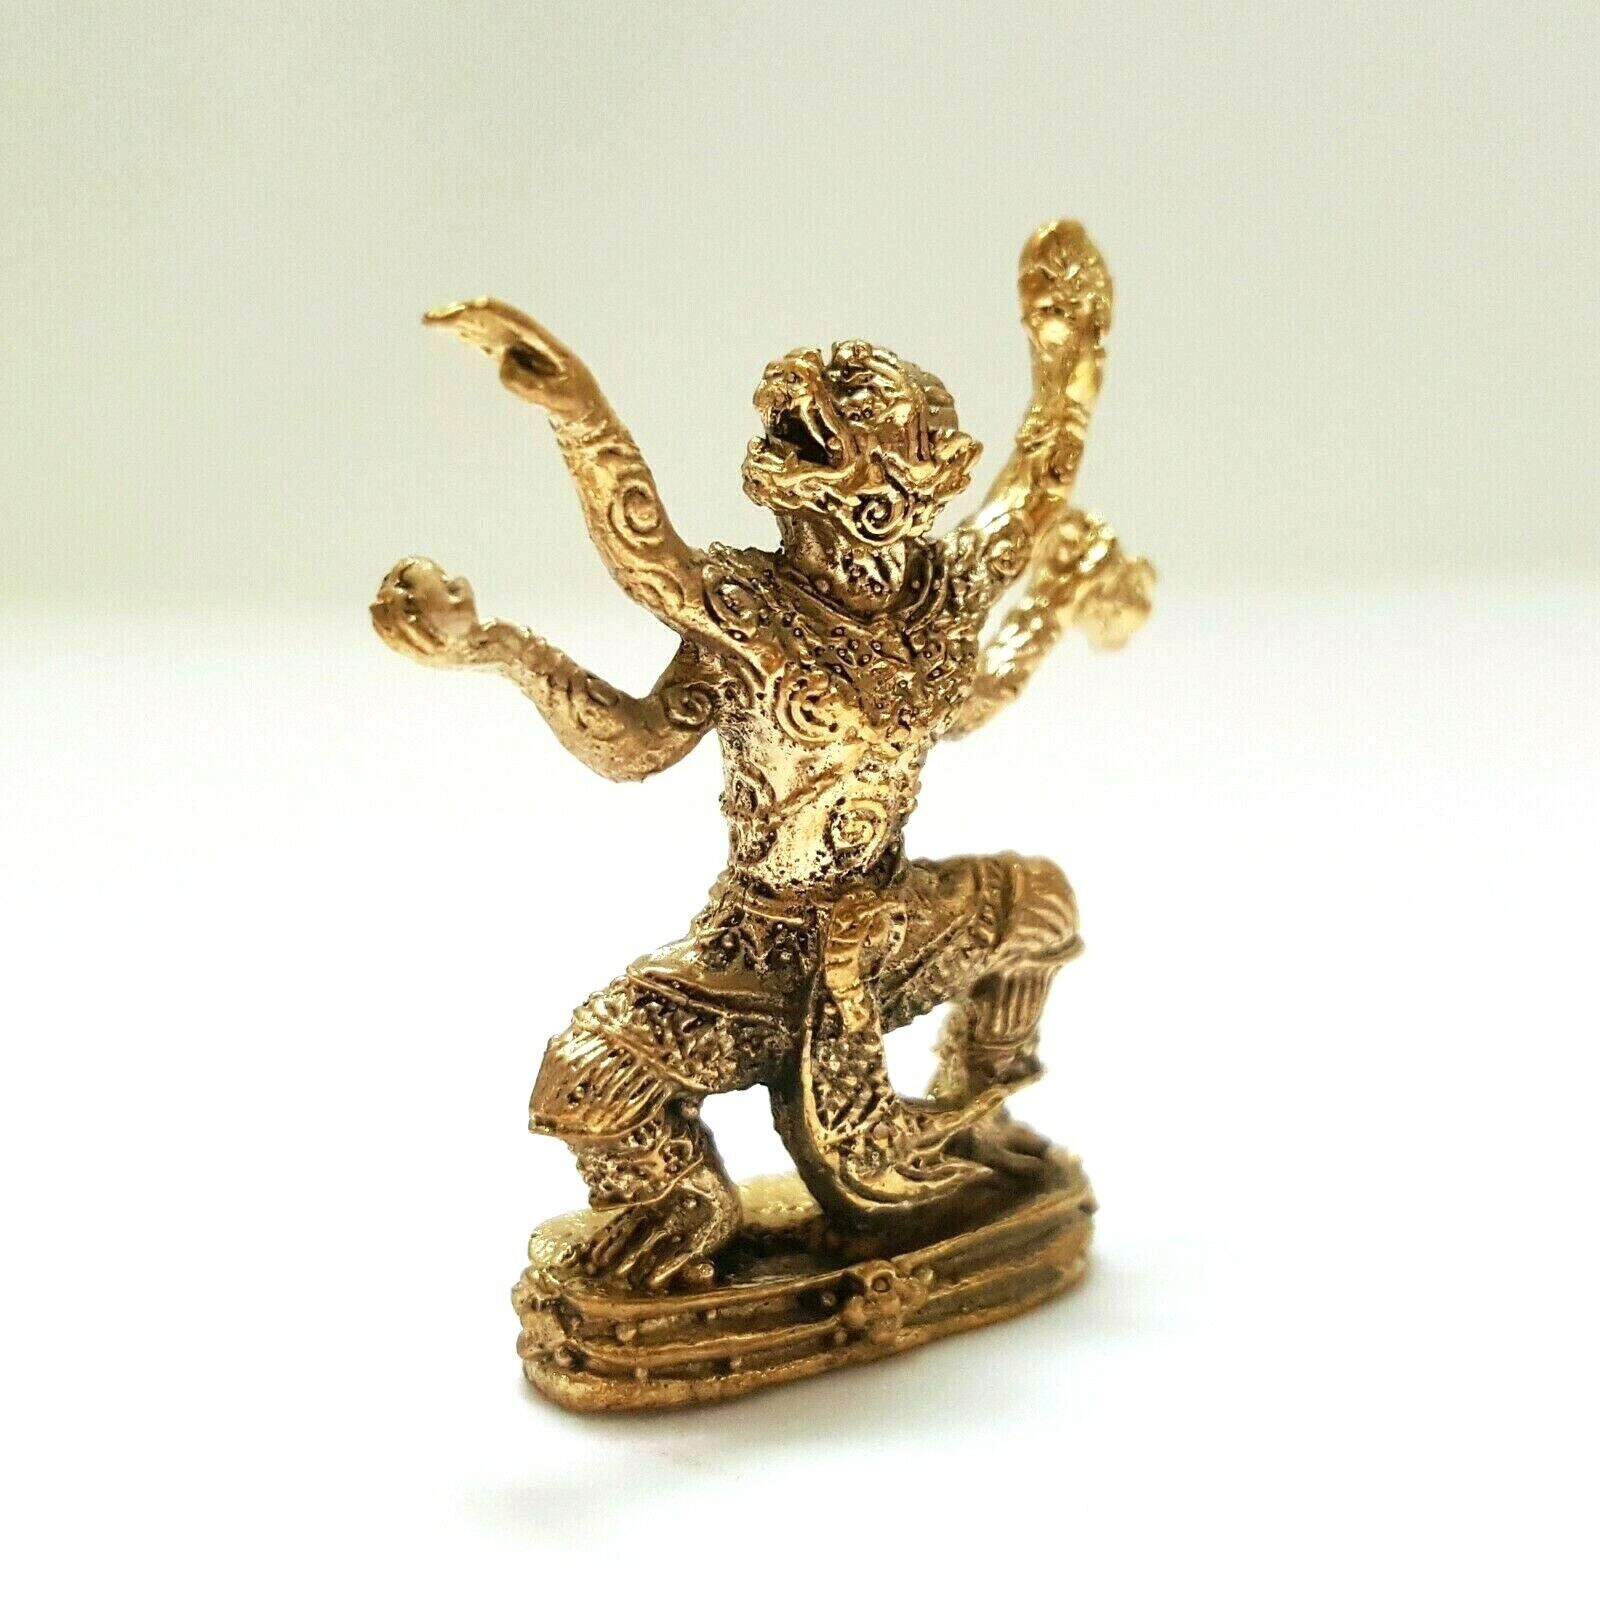 Gold Hanuman King Monkey Statue 4 Arms God Ramayana Mantra Thai Hindu Collect 1\